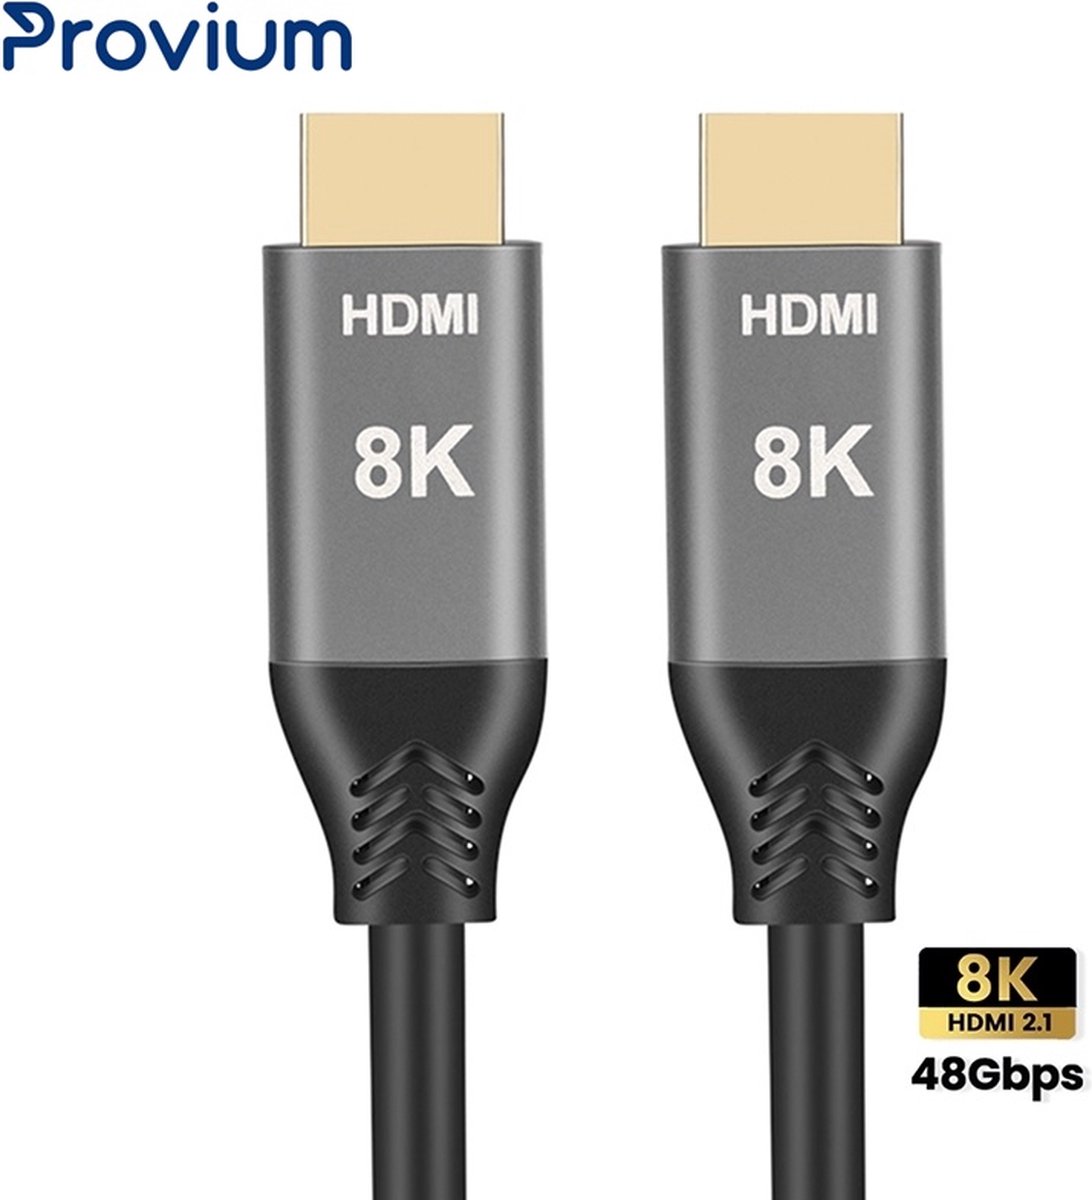 Provium - HDMI 2.1 kabel - Ultra HD 8K - HDMI naar HDMI kabel - voor o.a. PS5 en Xbox Series - 3 meter - zwart